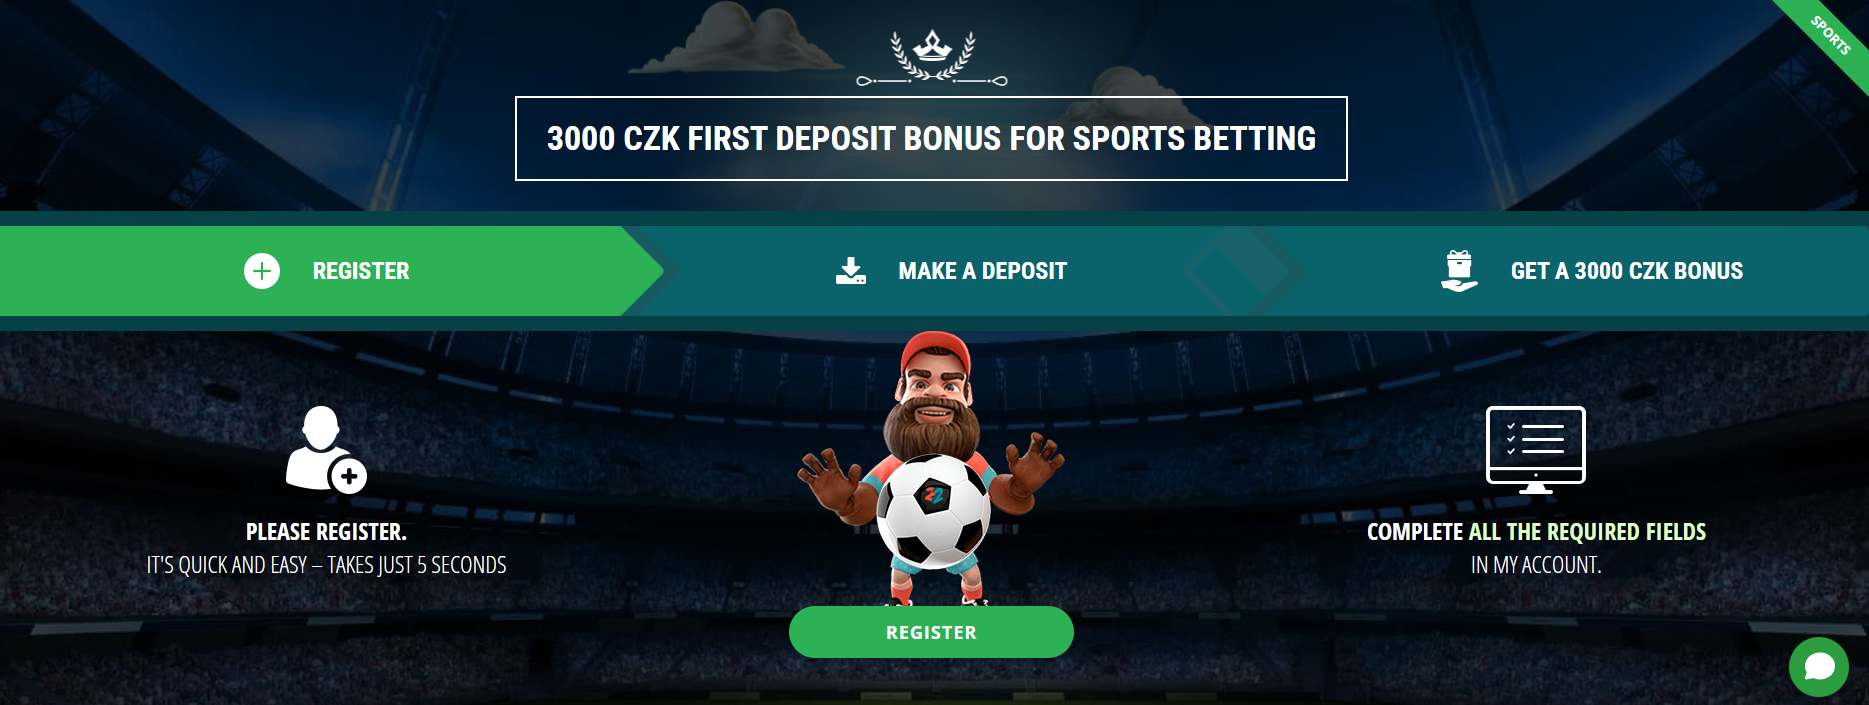 22bet Czechia Welcome bonus